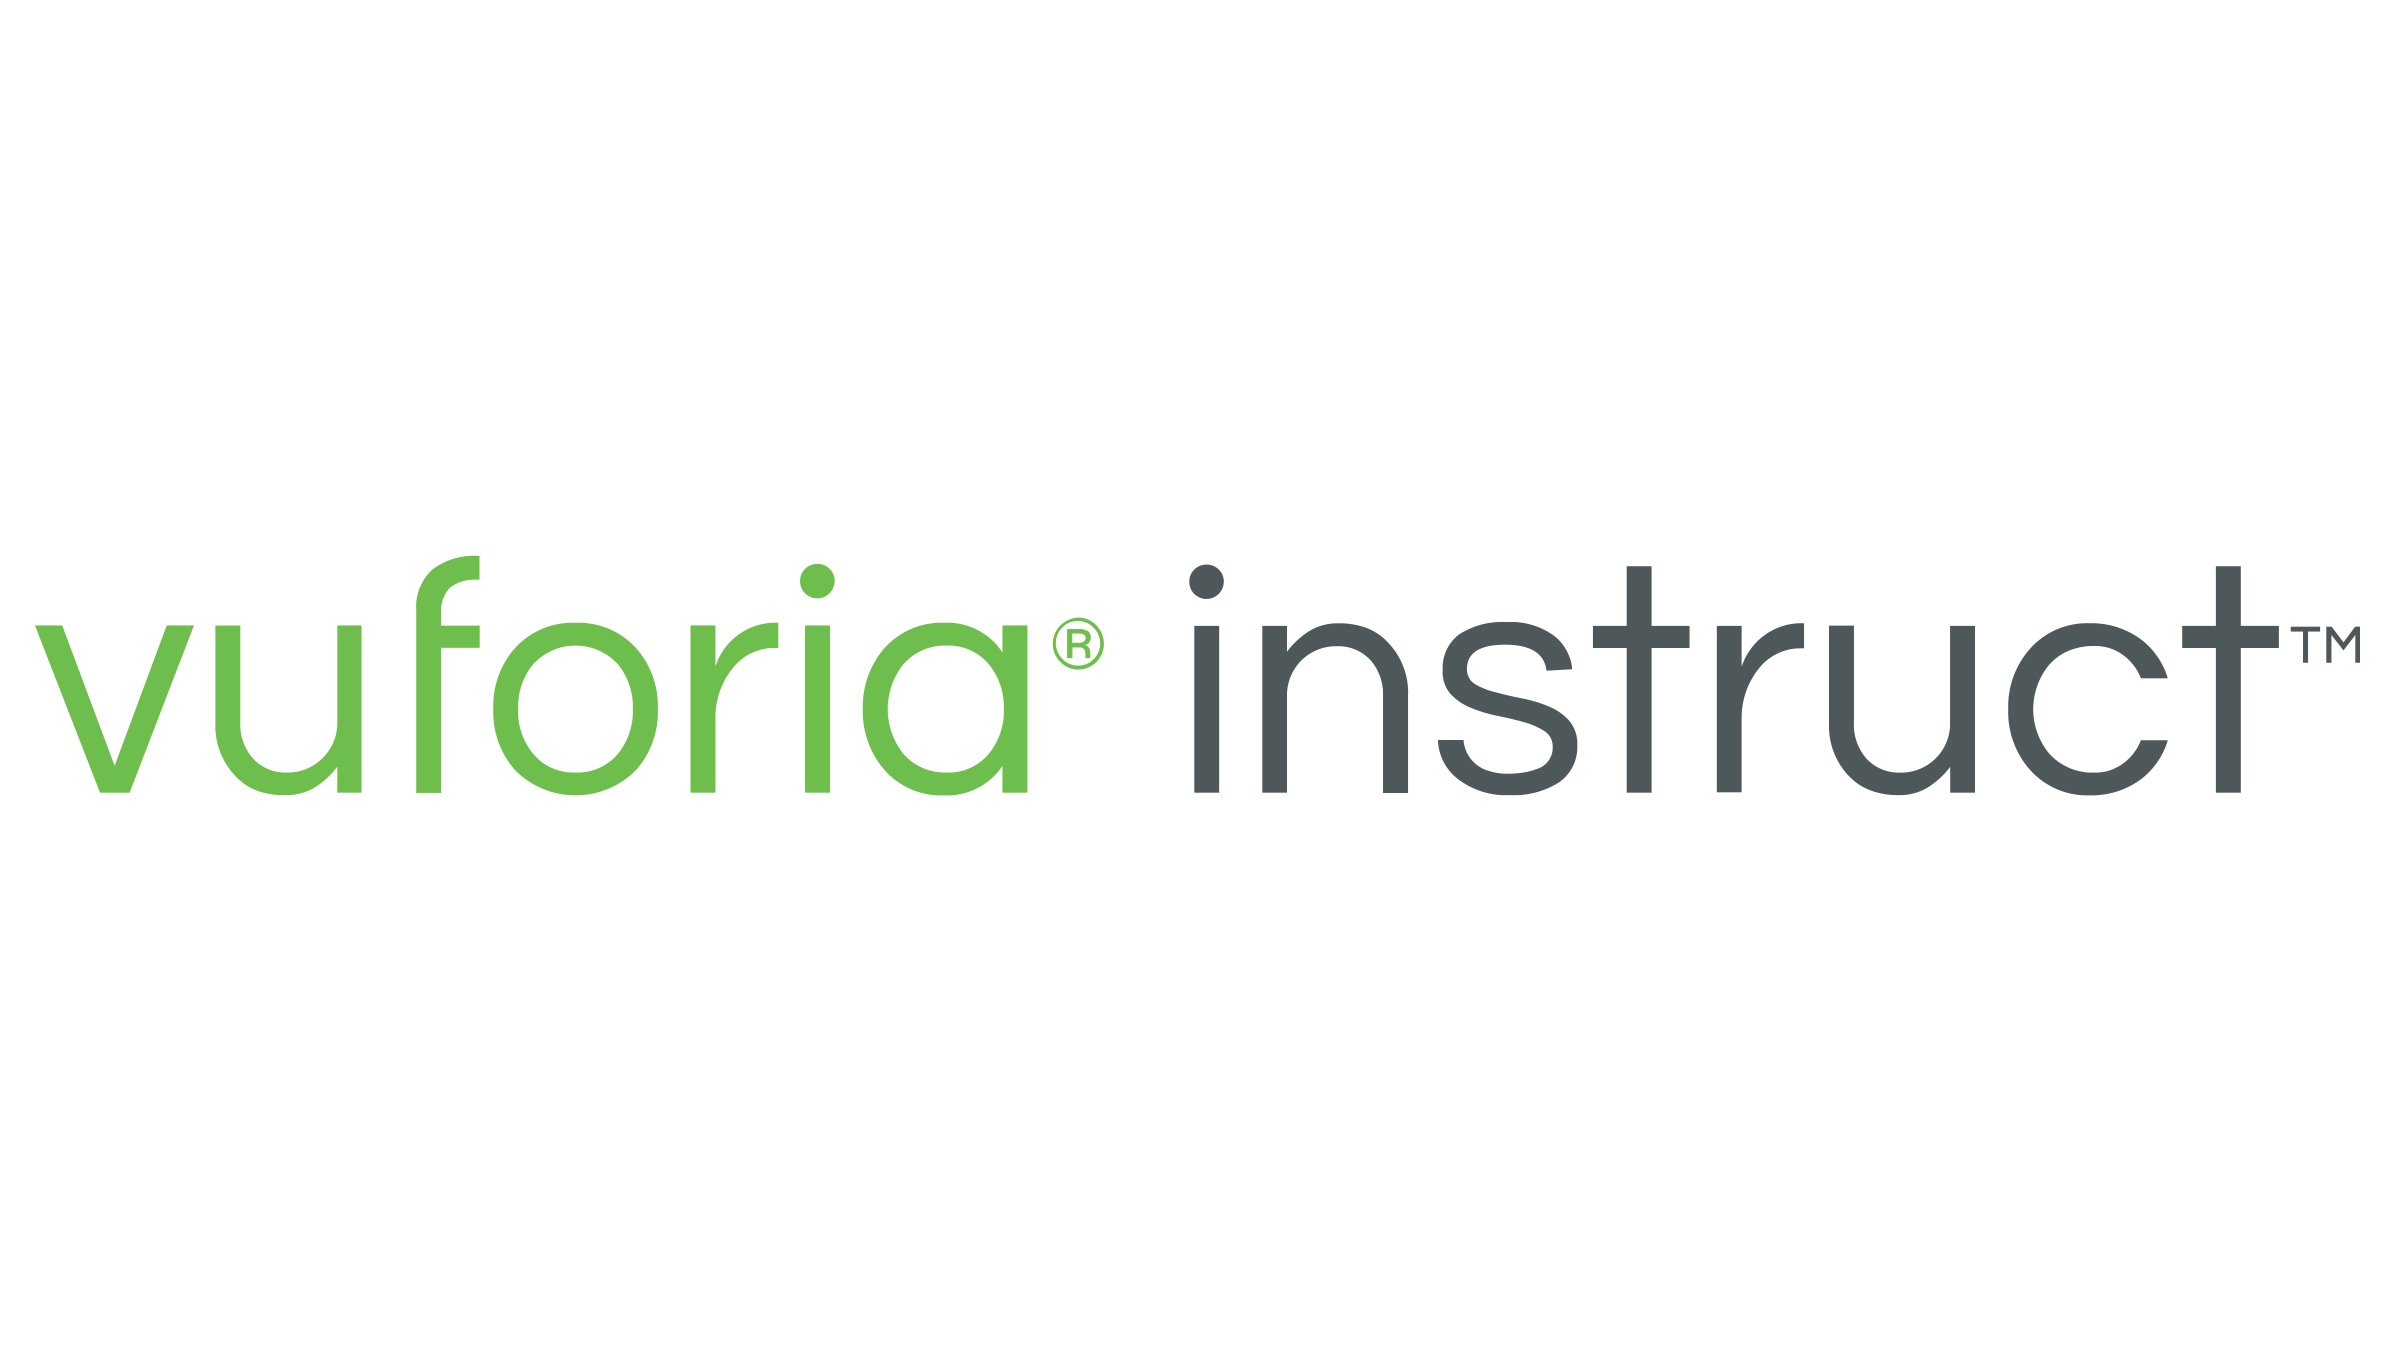 Logotipo verde y gris de PTC Vuforia Instruct